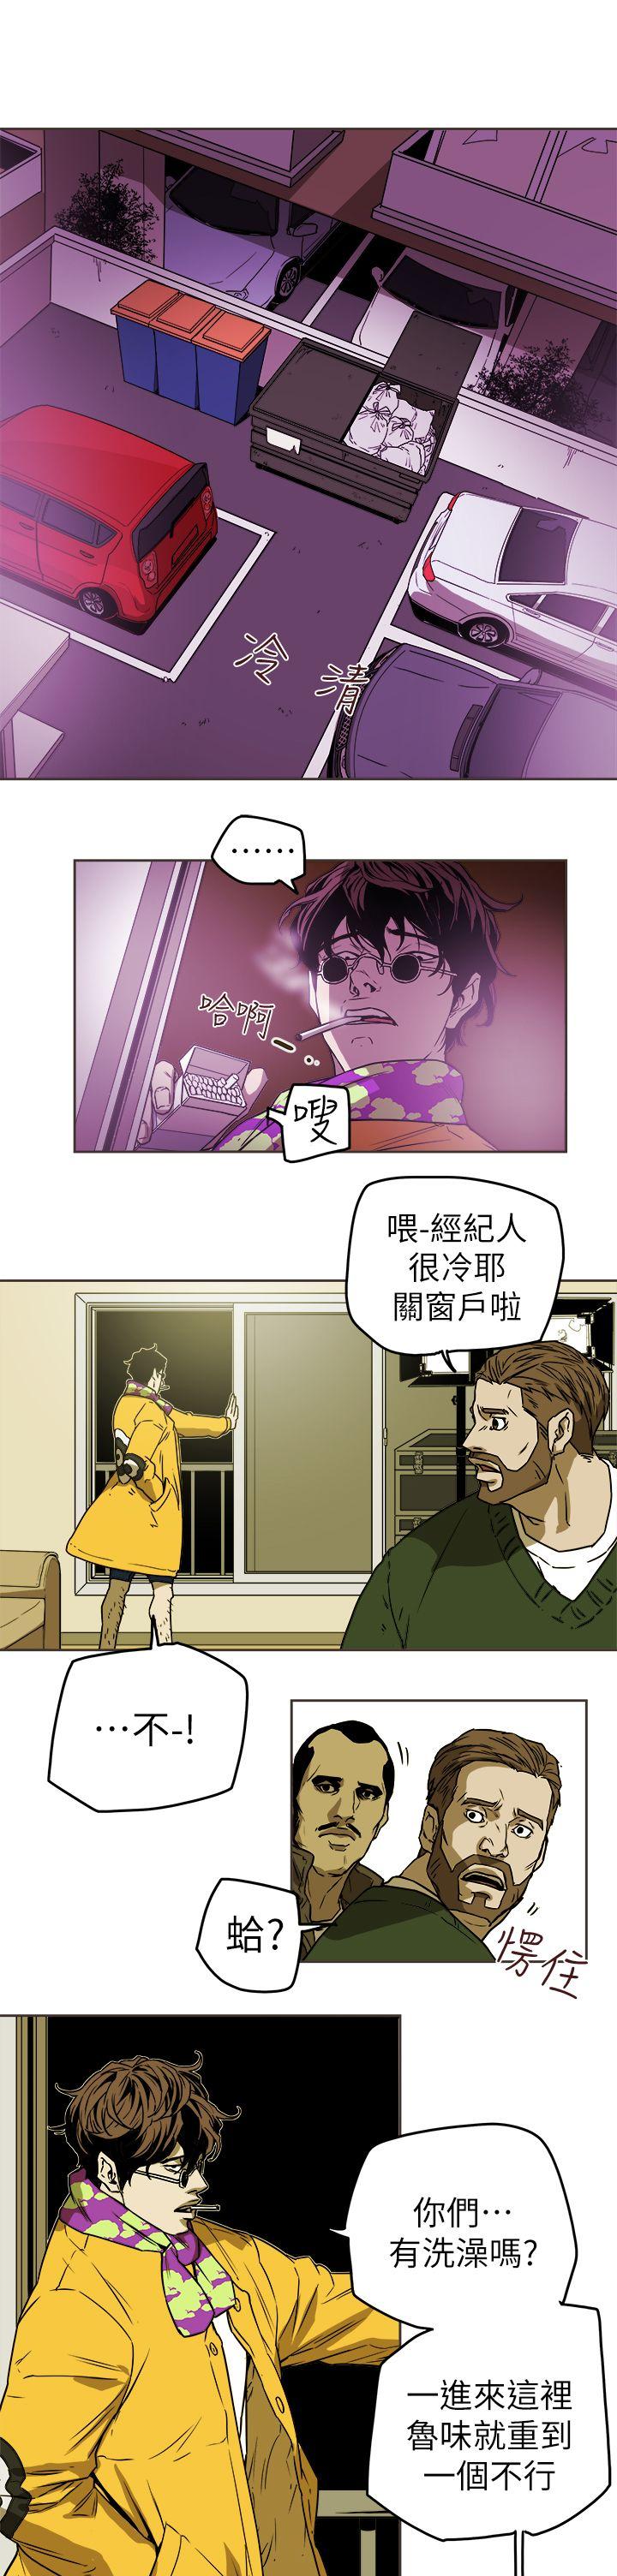 Honey trap 甜蜜陷阱  第89话 漫画图片13.jpg